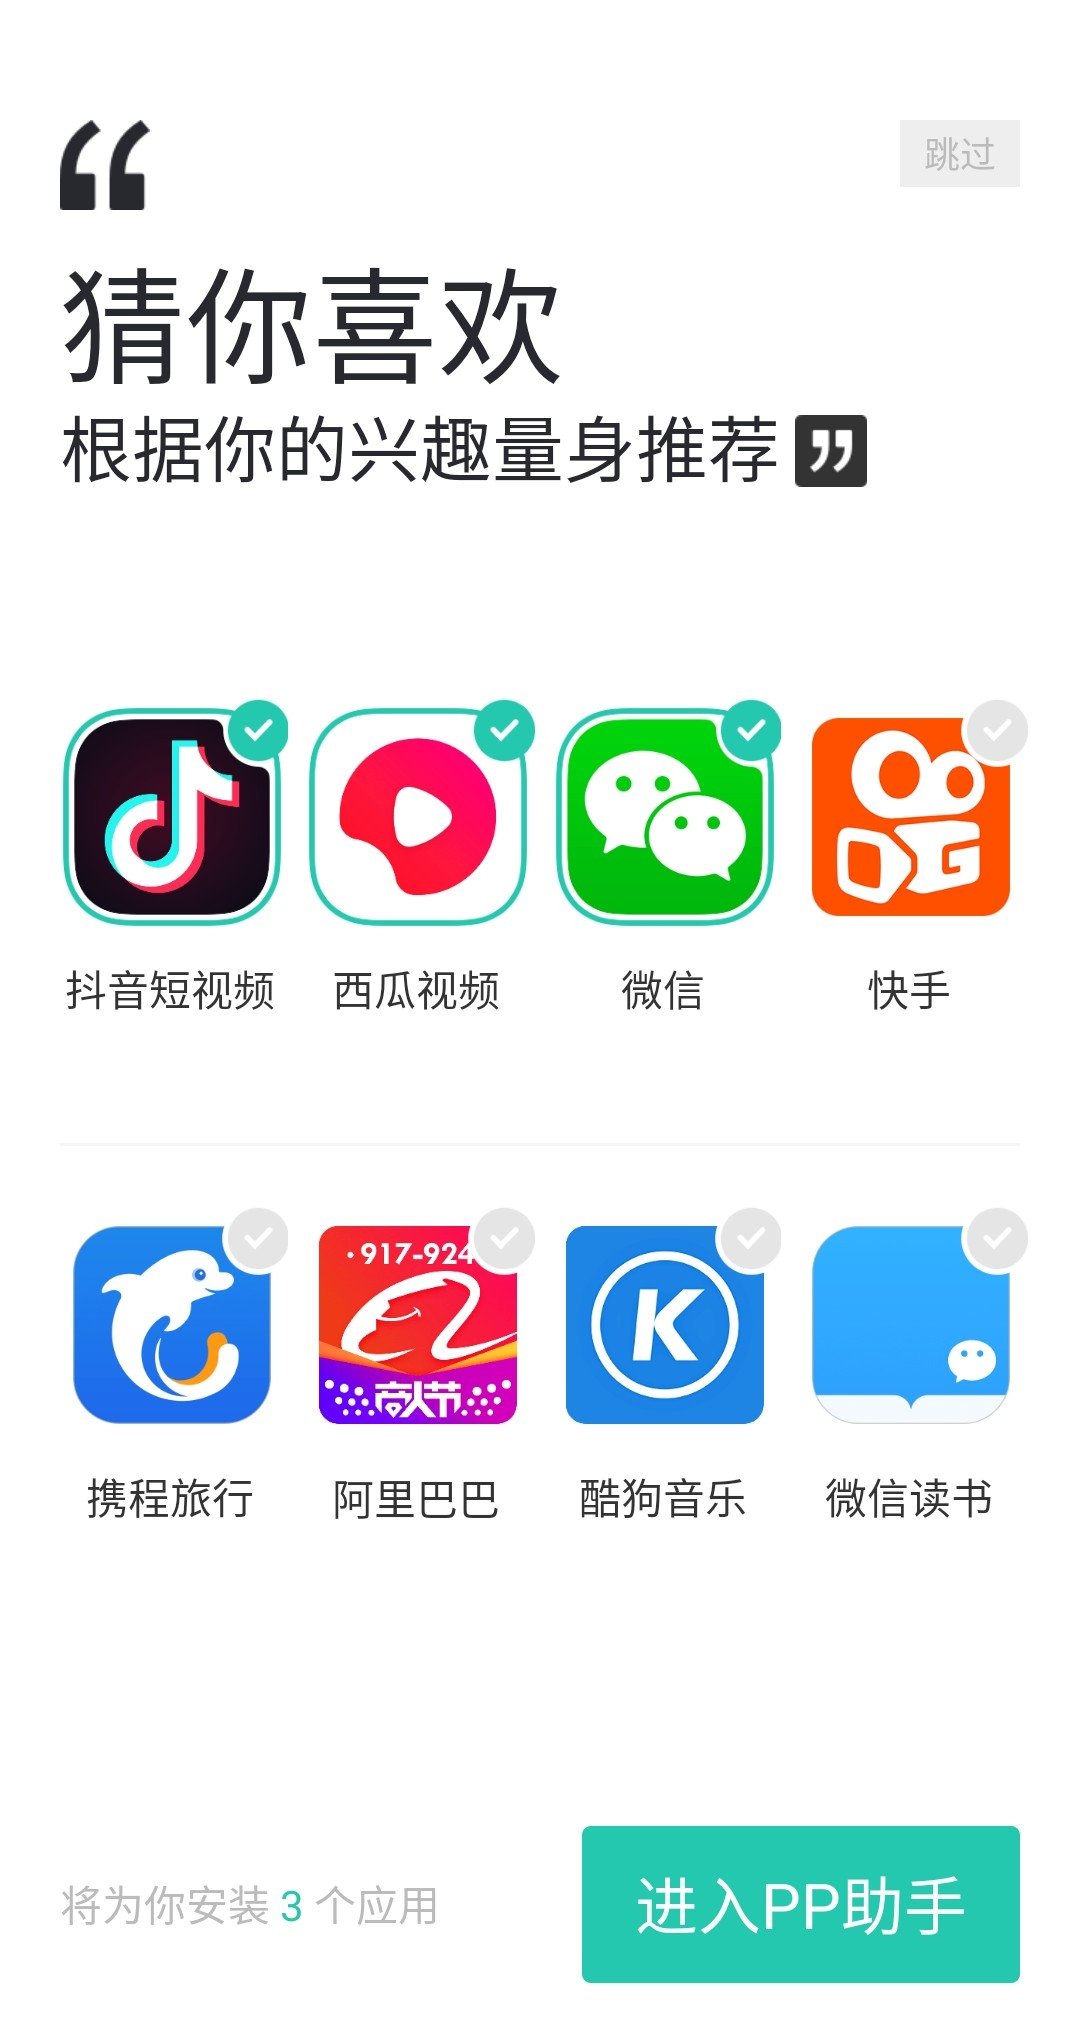 Китайский маркет для андроид